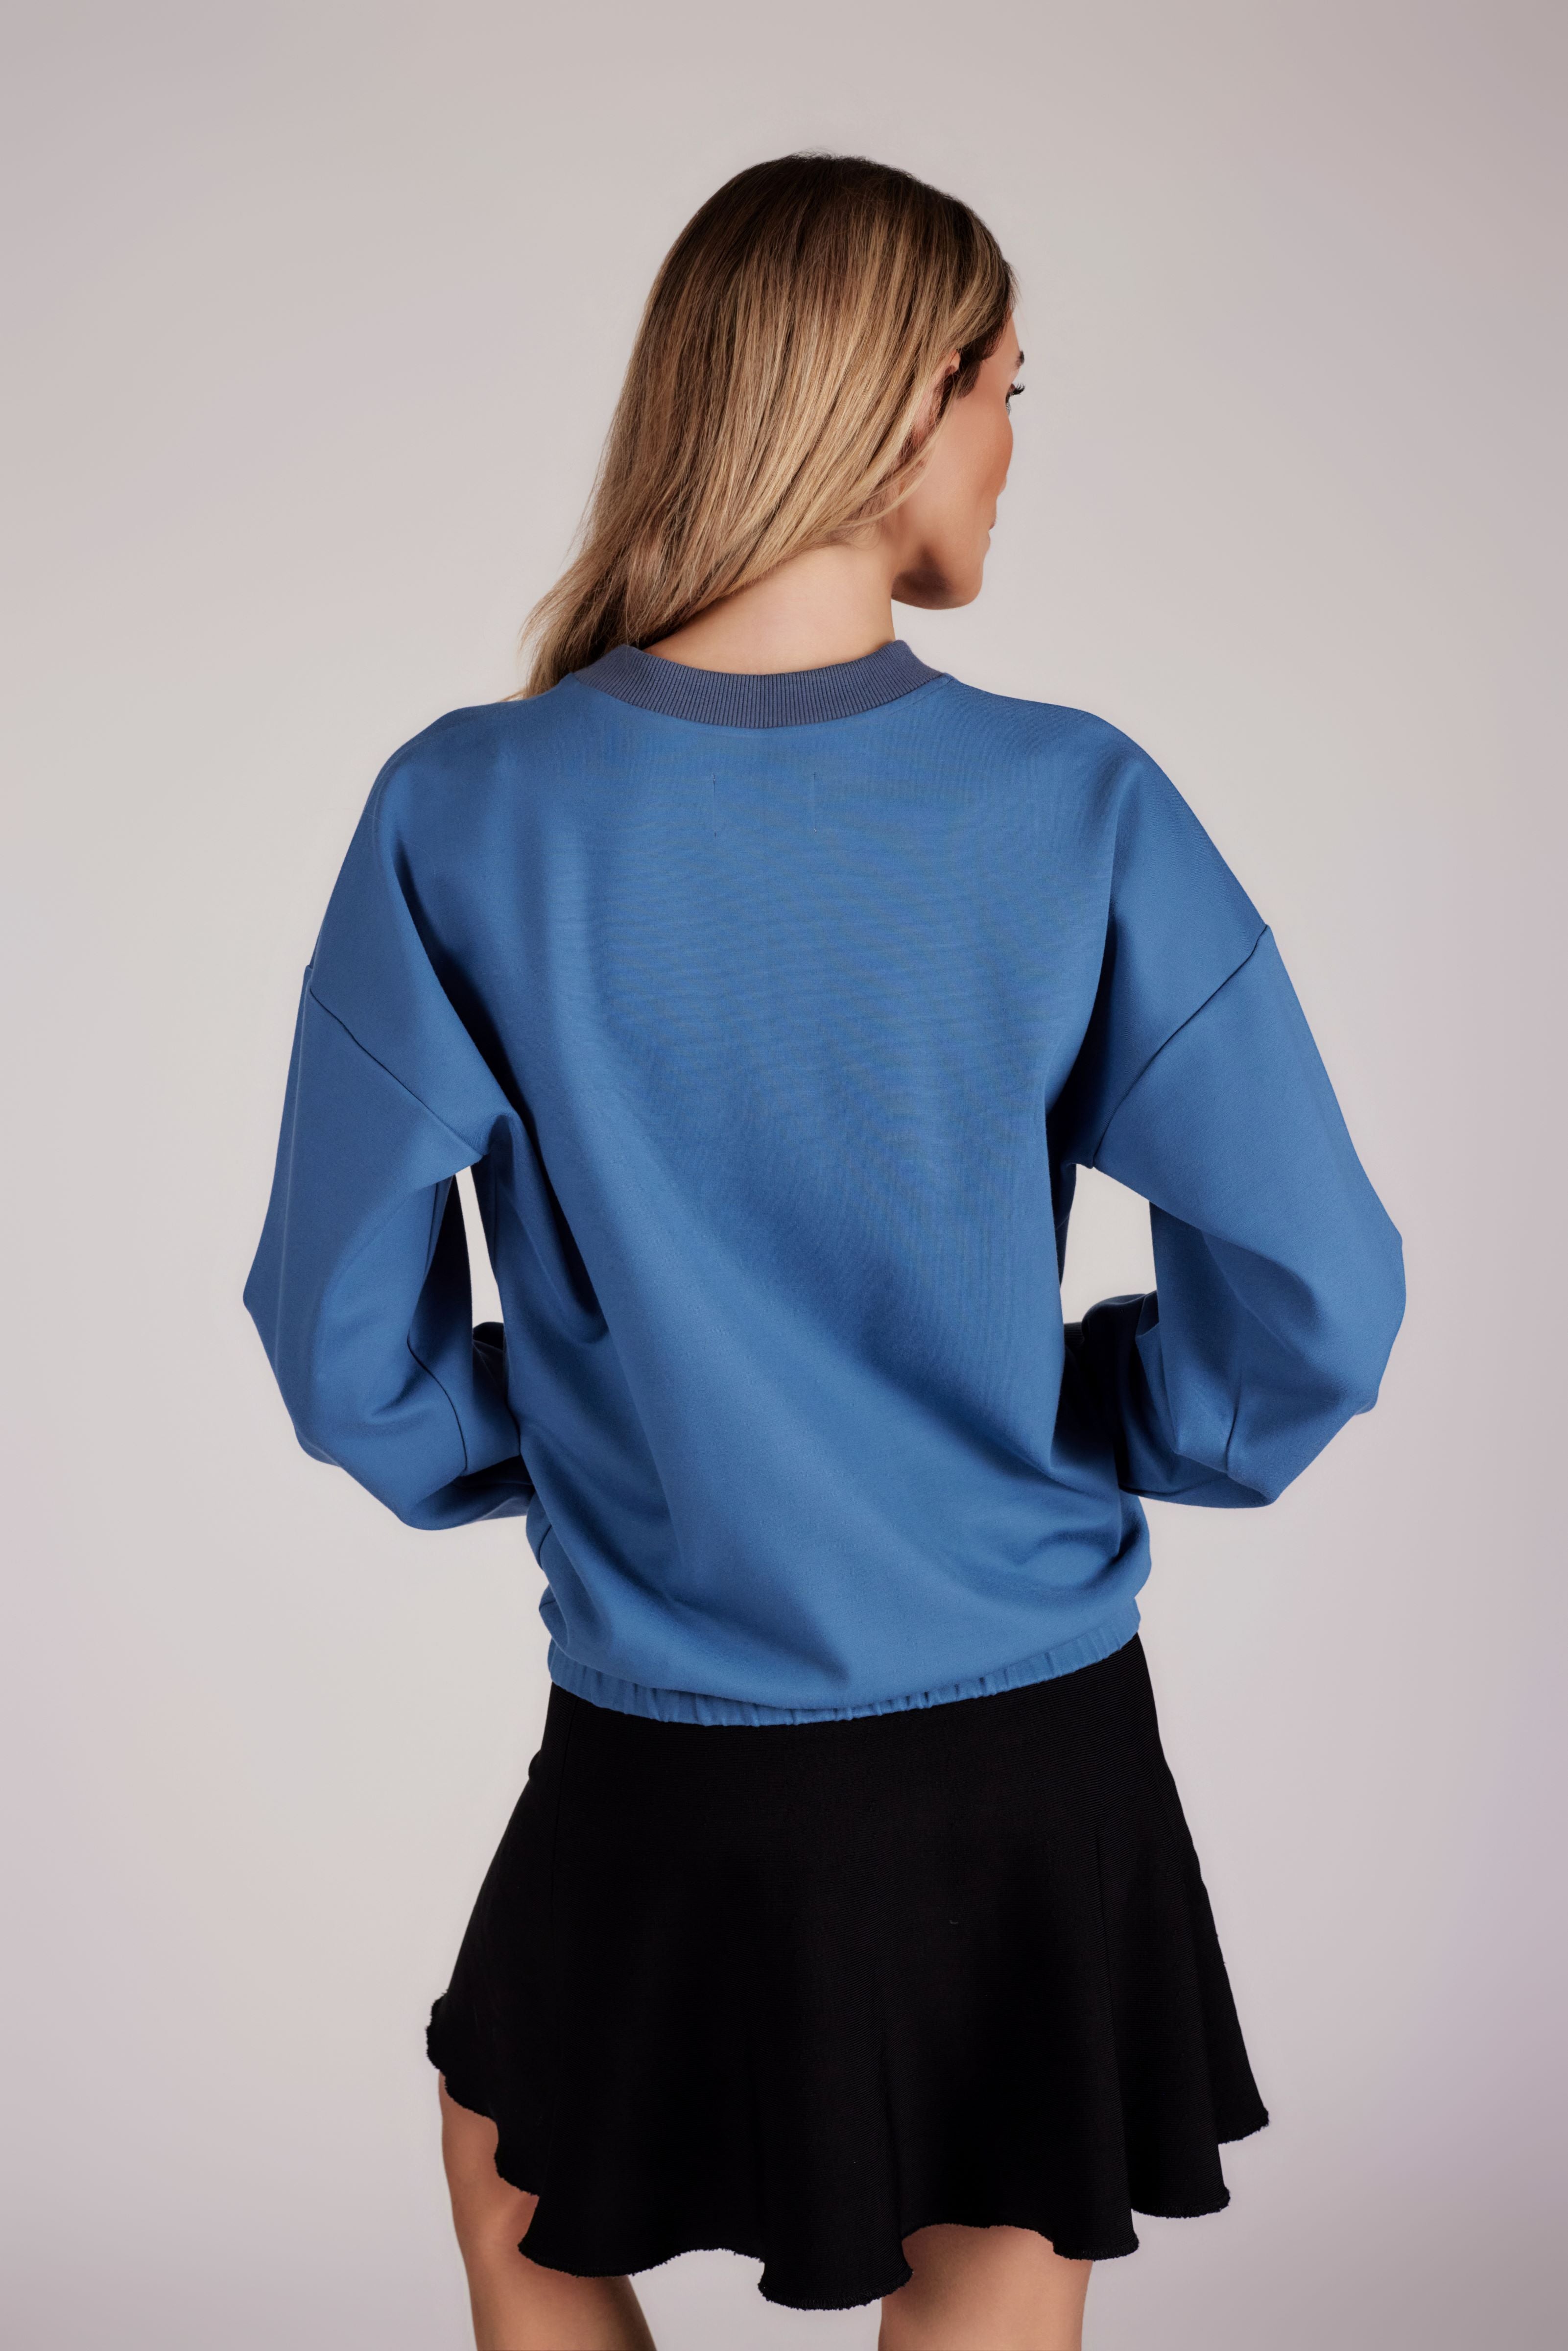 Elastic Waist Pullover Sweater - Stellar Blue - Olivvi World